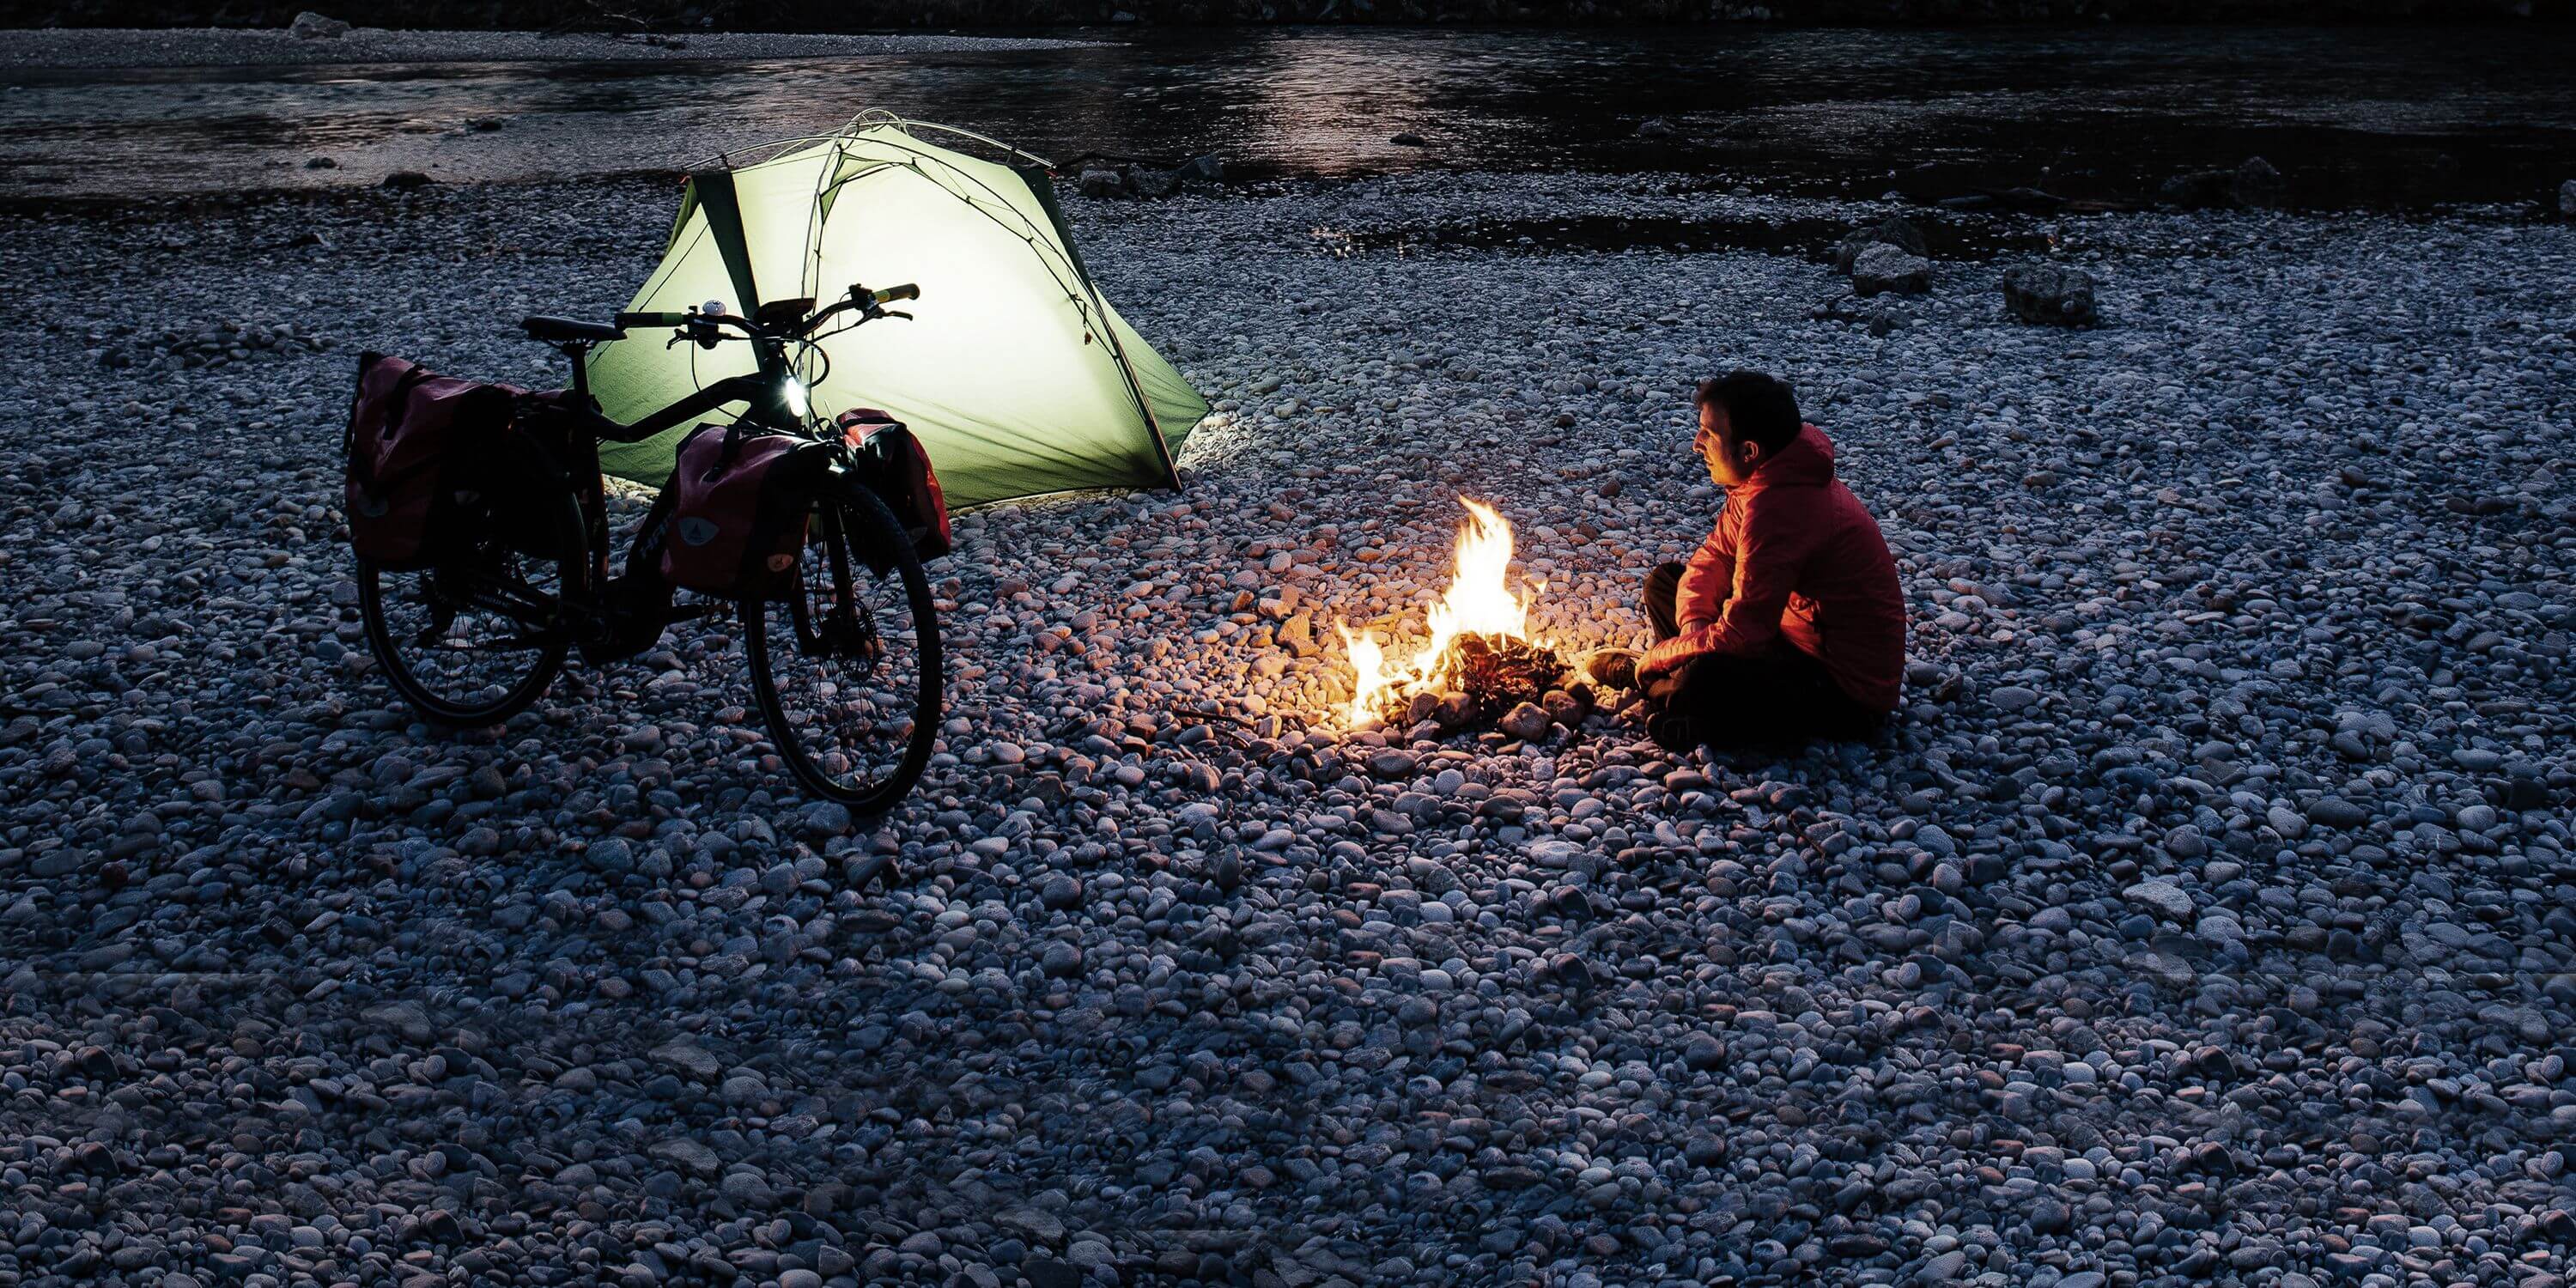 Haibike Hero Maximilian Semsch trekking adventure with tent and campfire